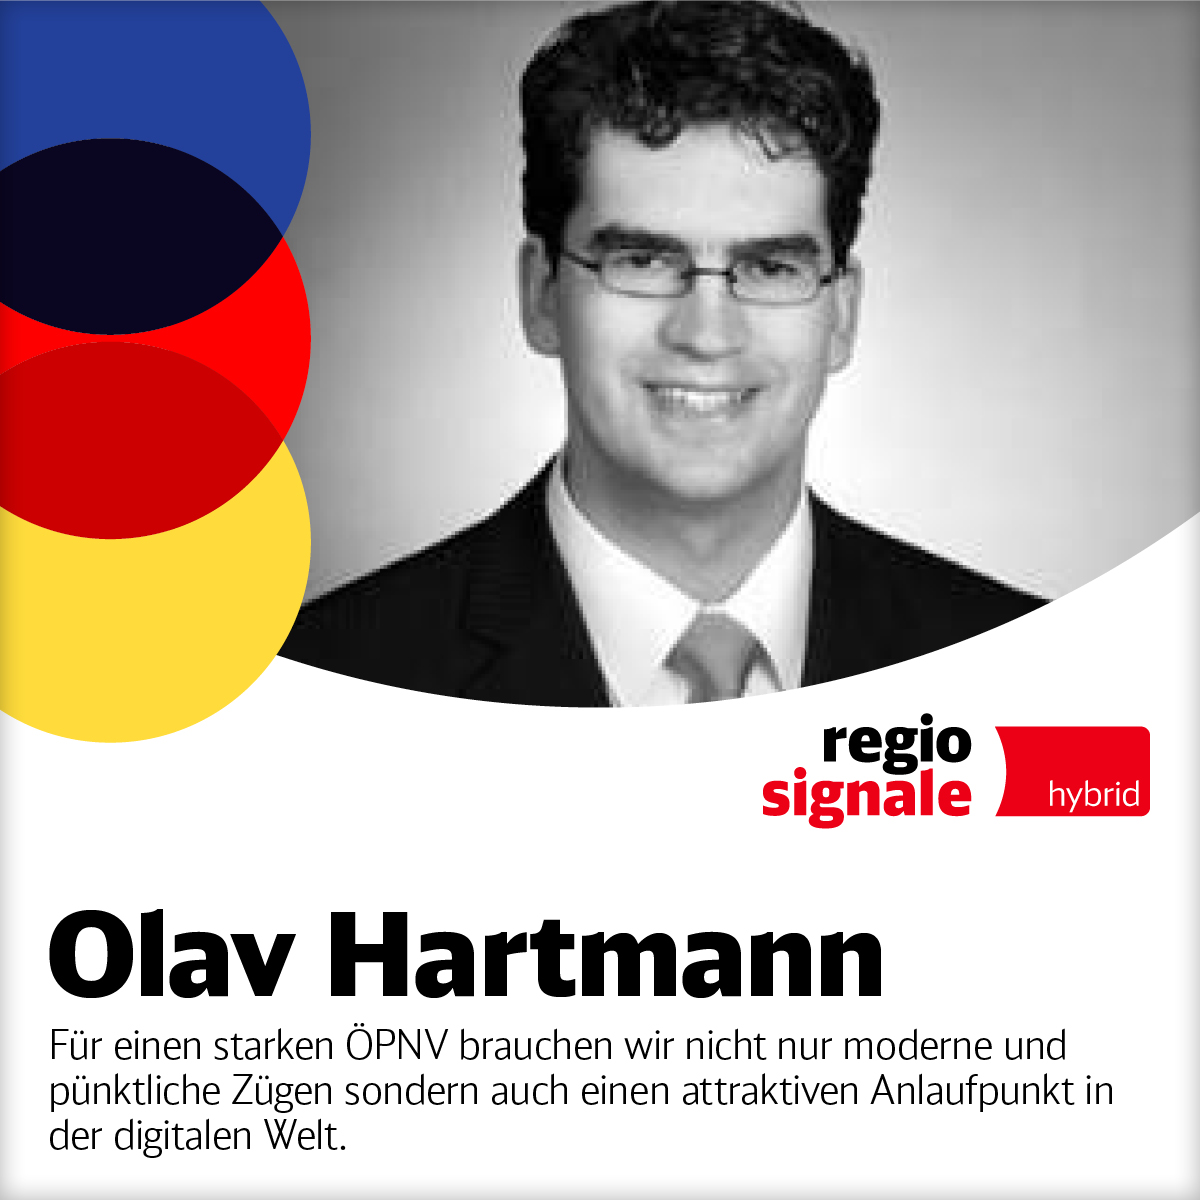 Olav Hartmann